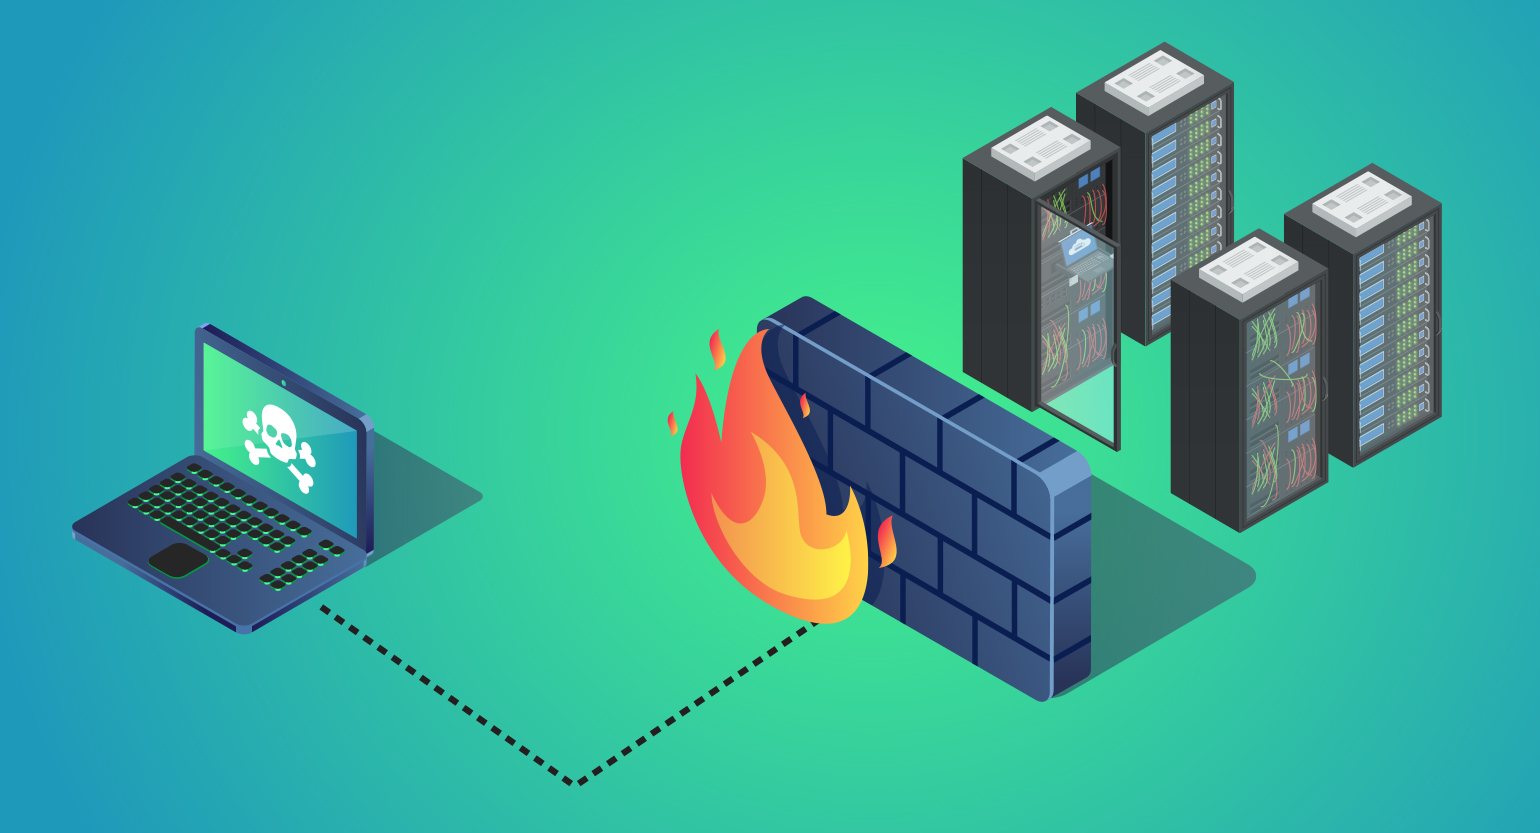 Gartner Magic Quadrant for Network Firewalls 2019